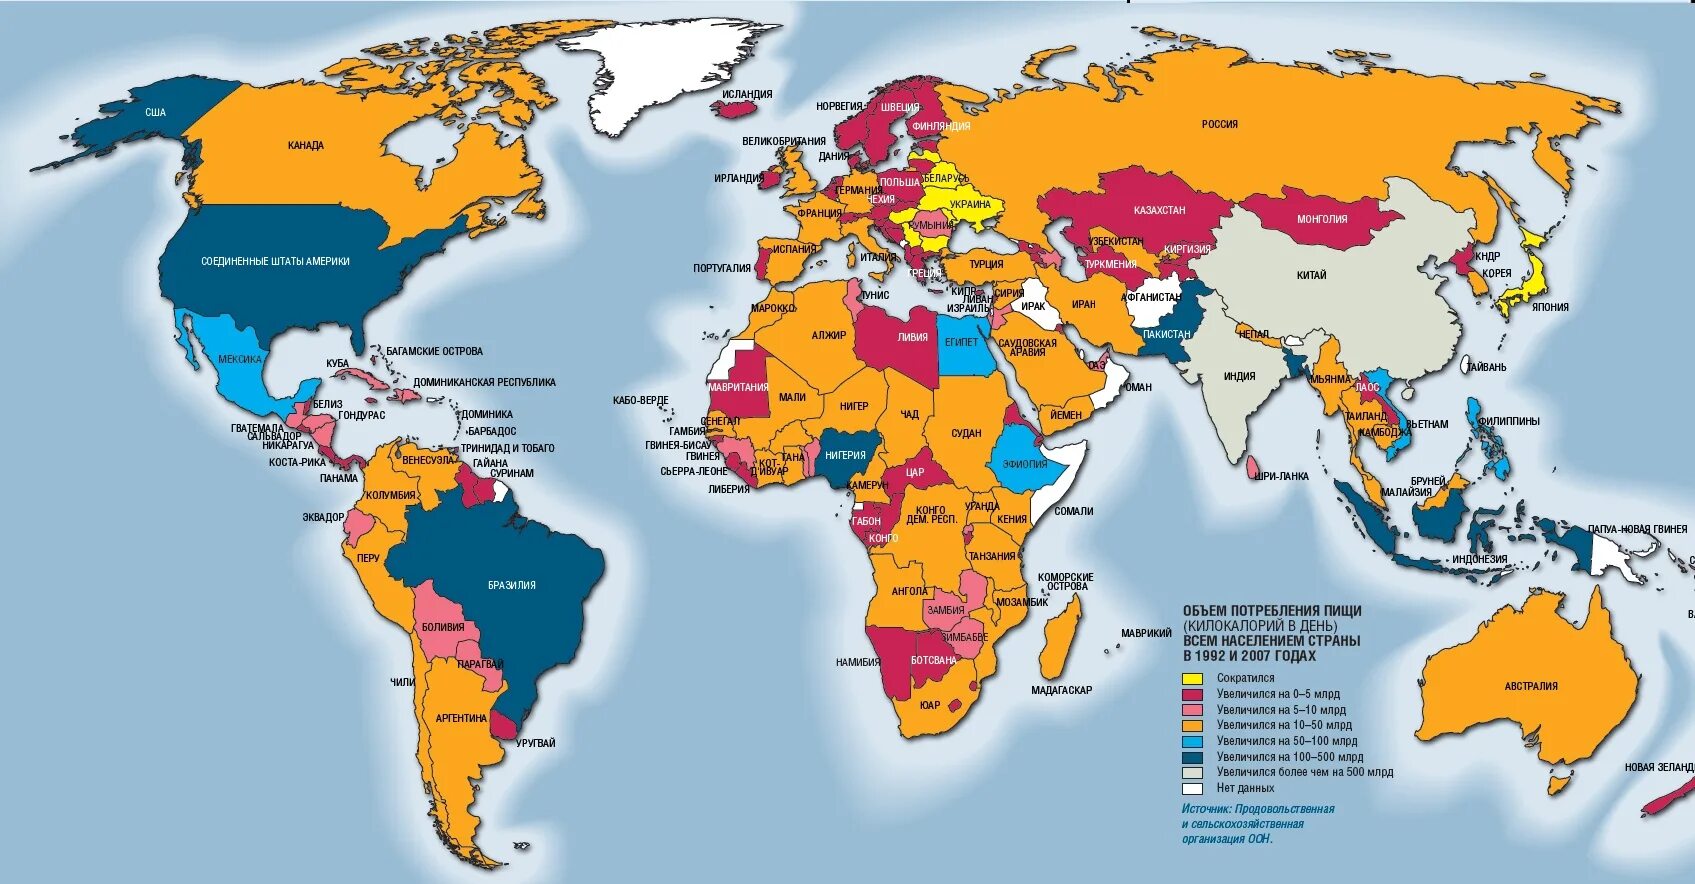 Развитые и развивающиеся страны карта. Развивающиеся страны на карте. Экономическое развитие стран карта.